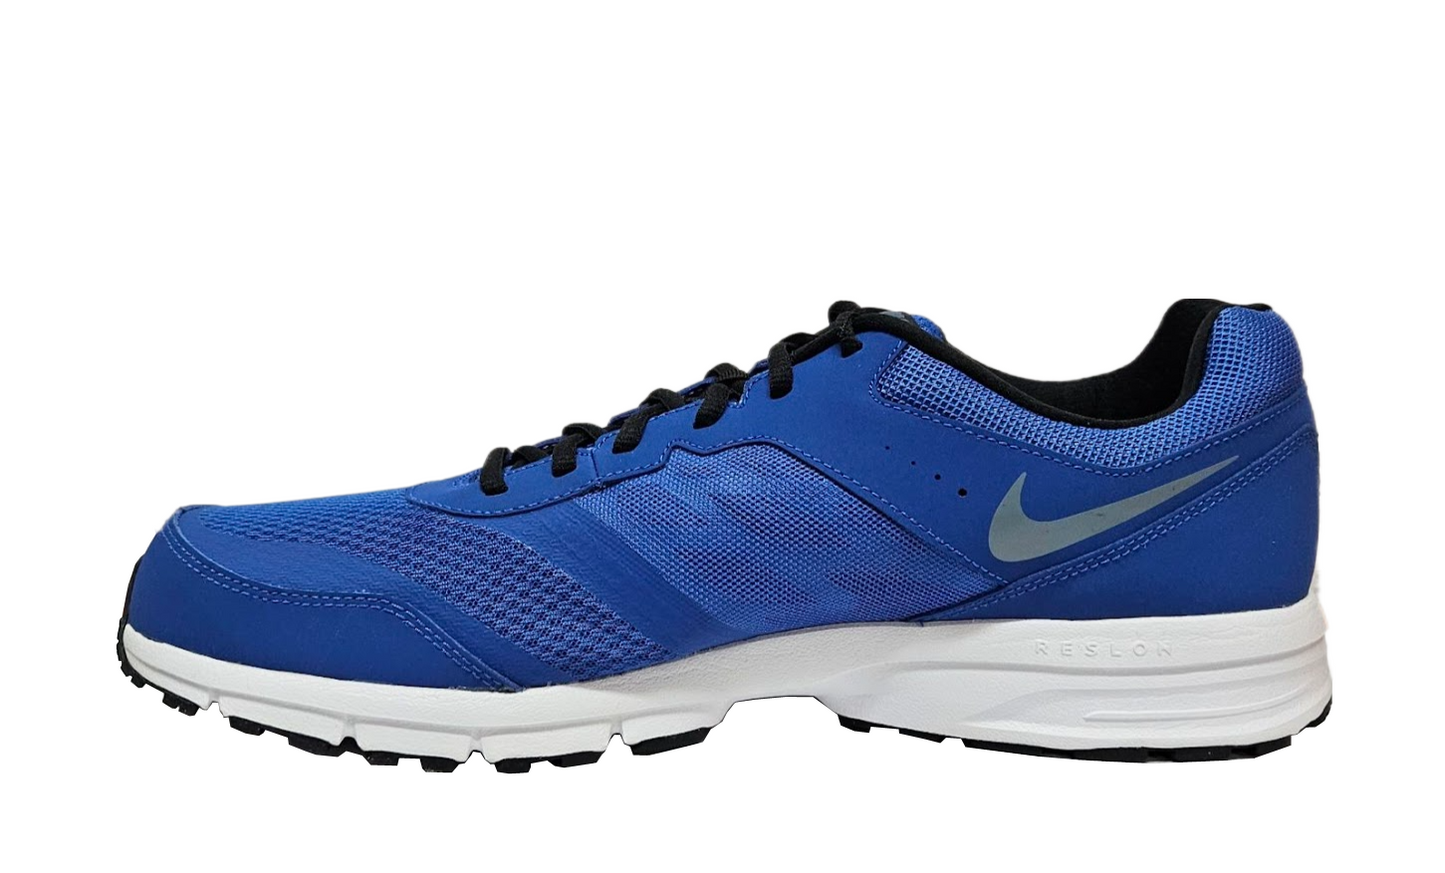 Nike Men Air Relentless 4 Lyon Blue / Blue Graphite-Black-White 685138-402